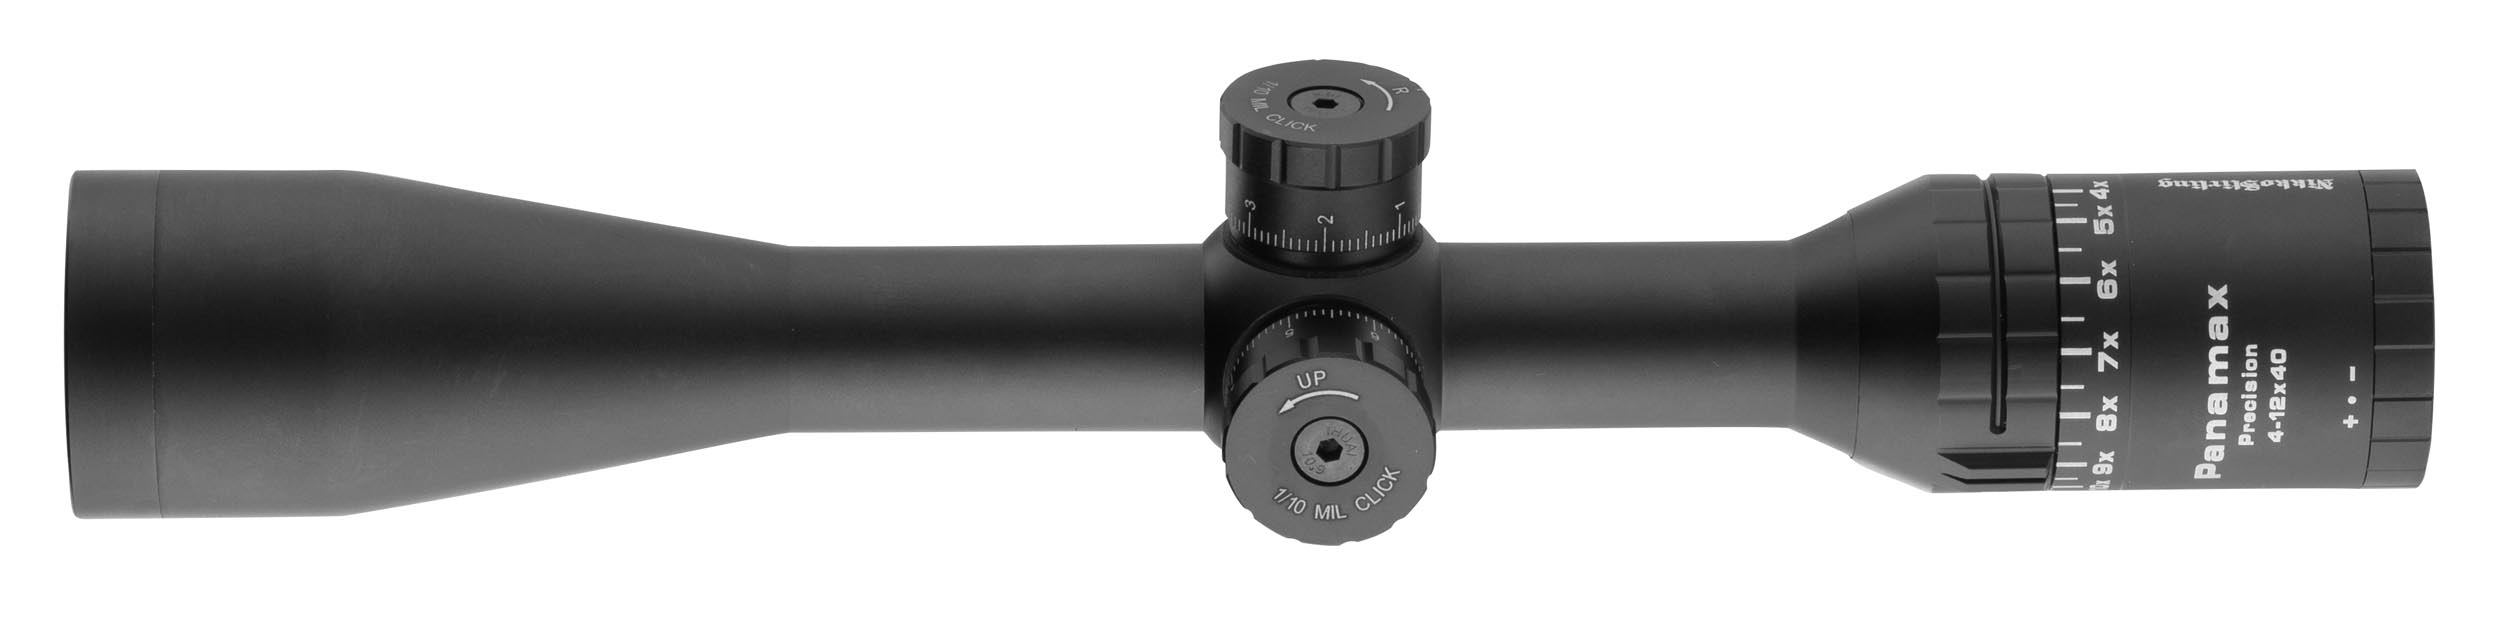 ONP4040-6 Nikko Stirling Panamax 4-12x40 mildot scope